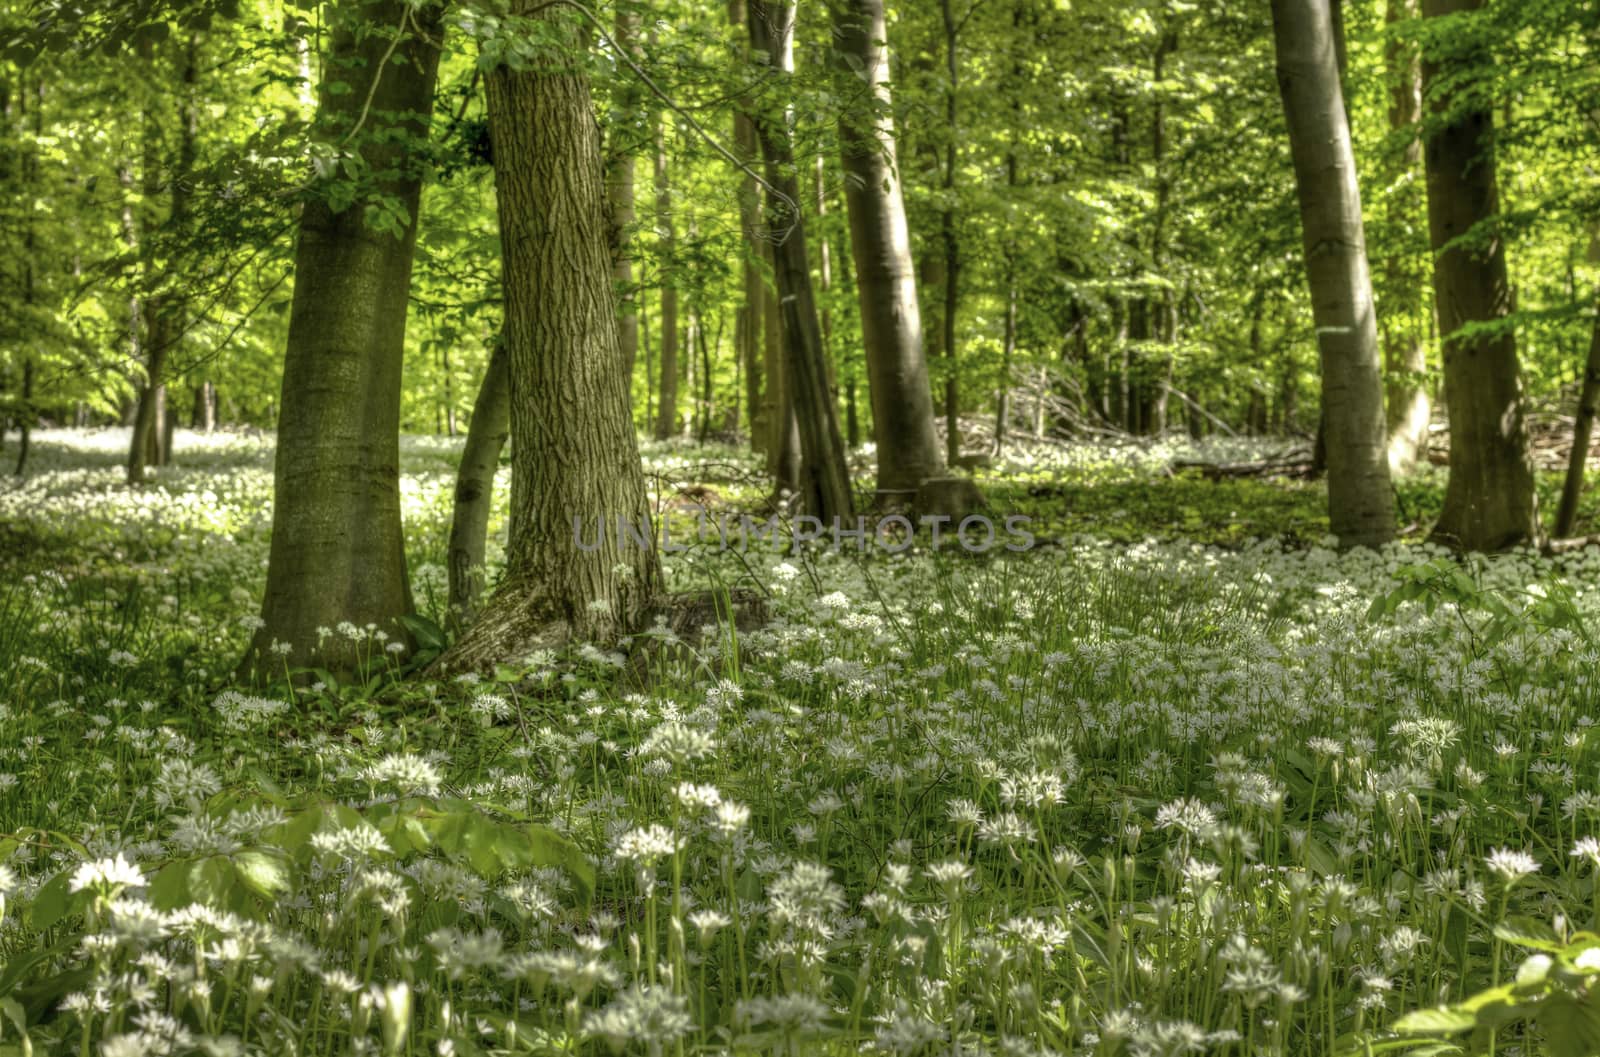 Germany: Spring In Lower Saxony by gstalker